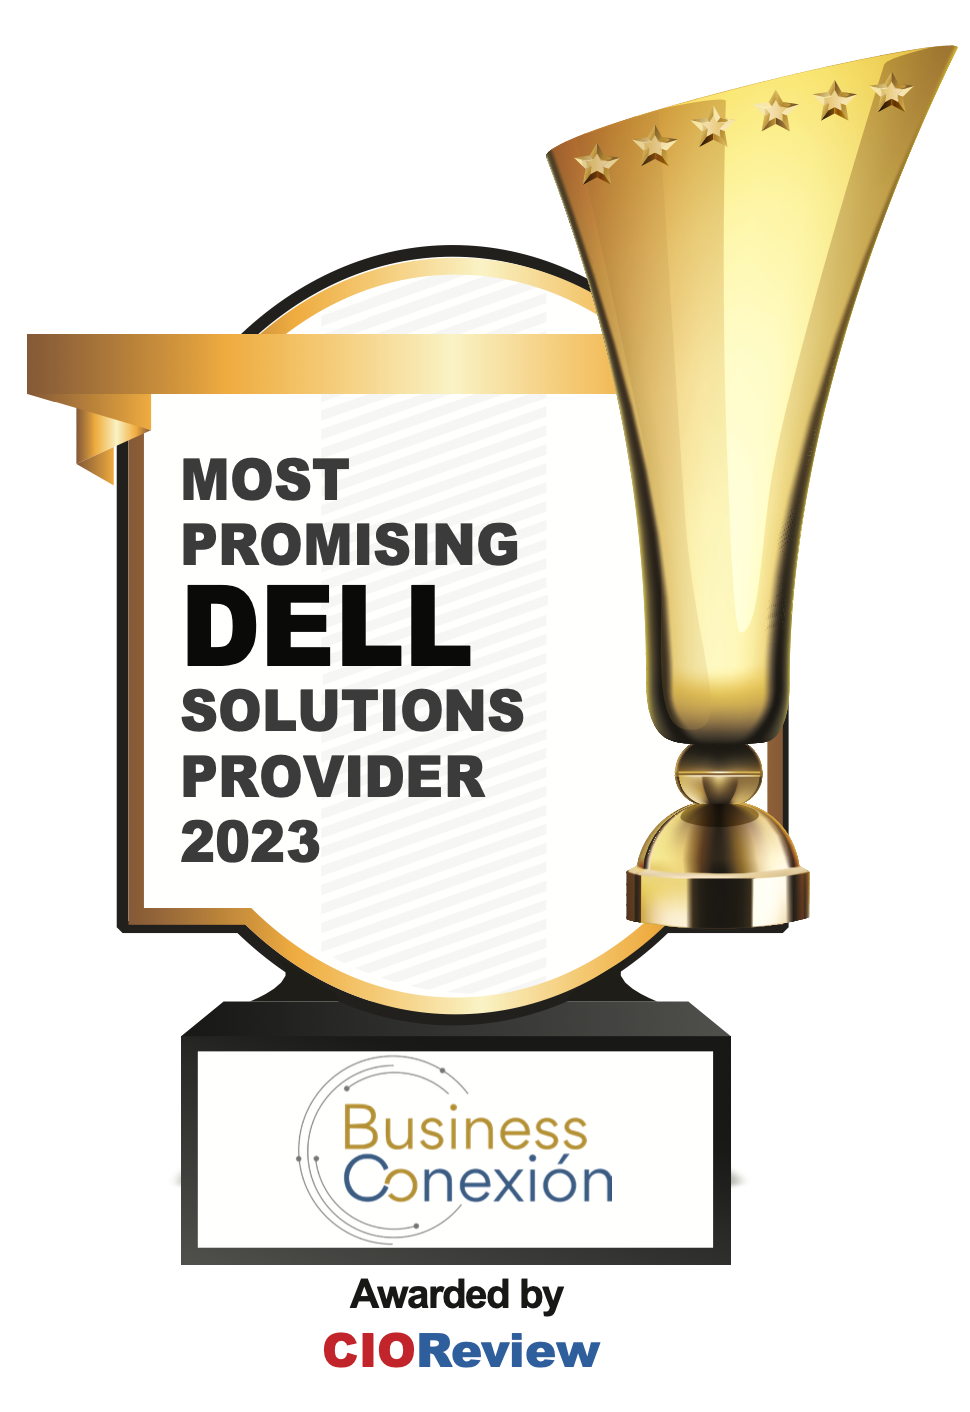 Premio CIO Review otorgado a Business Conexión